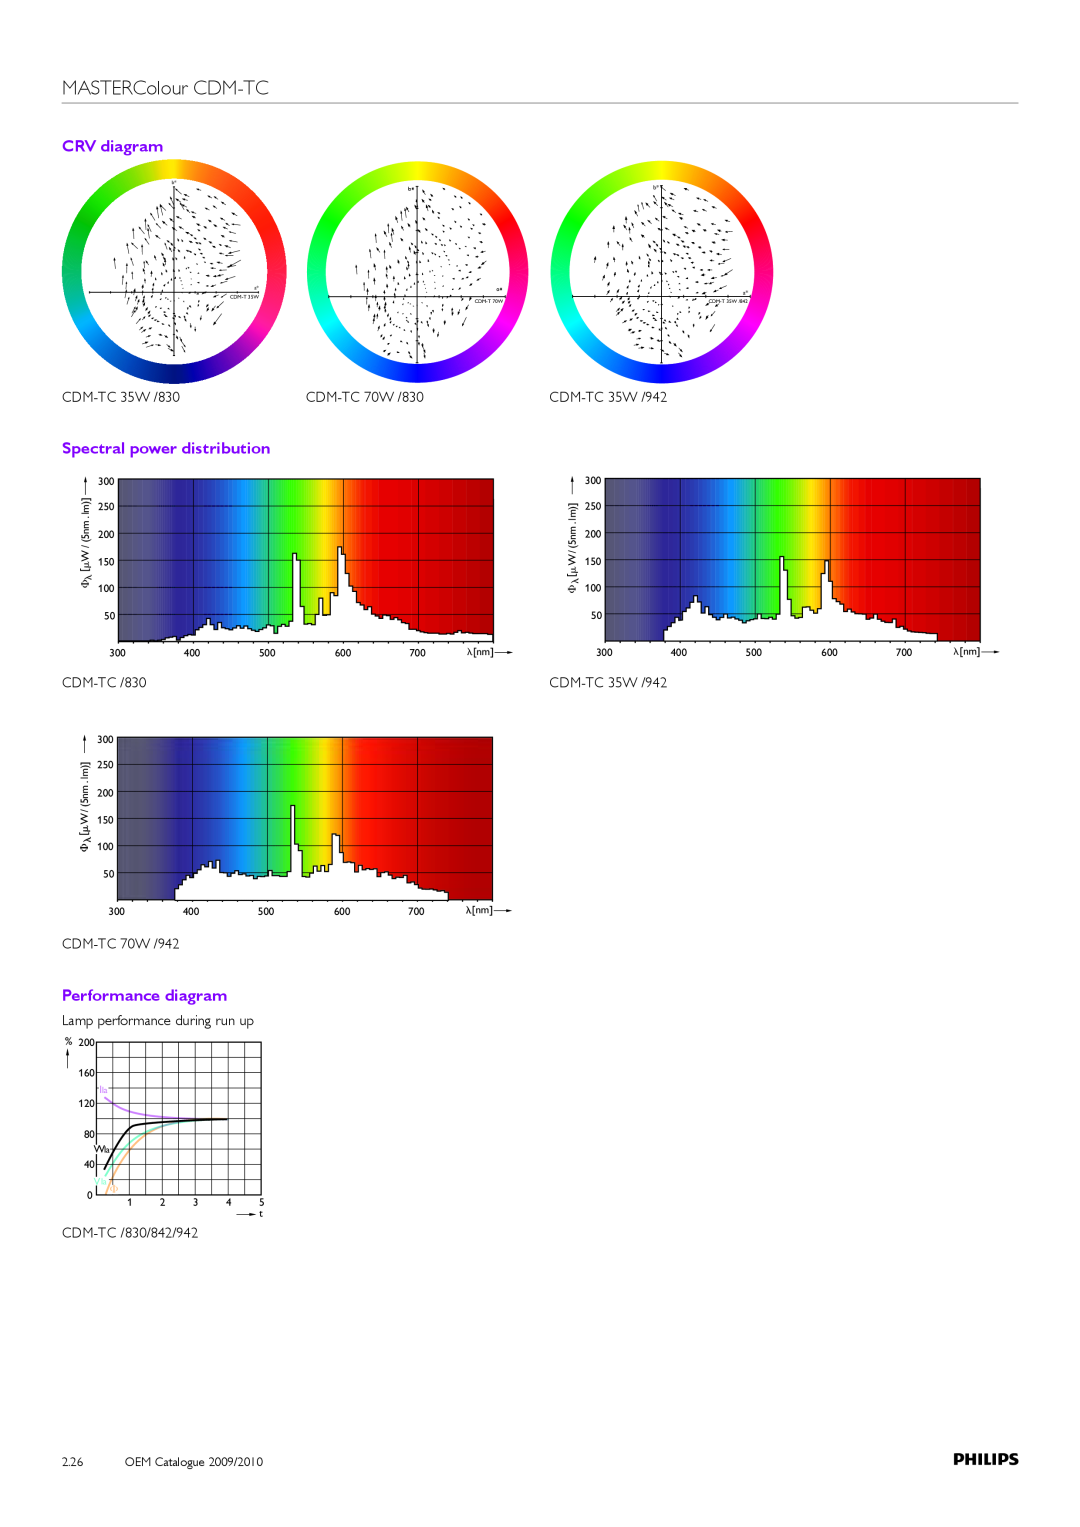 Philips Compact HID Lamp and Gear manual MASTERColour CDM-TC, CRV diagram, Spectral power distribution, Performance diagram 